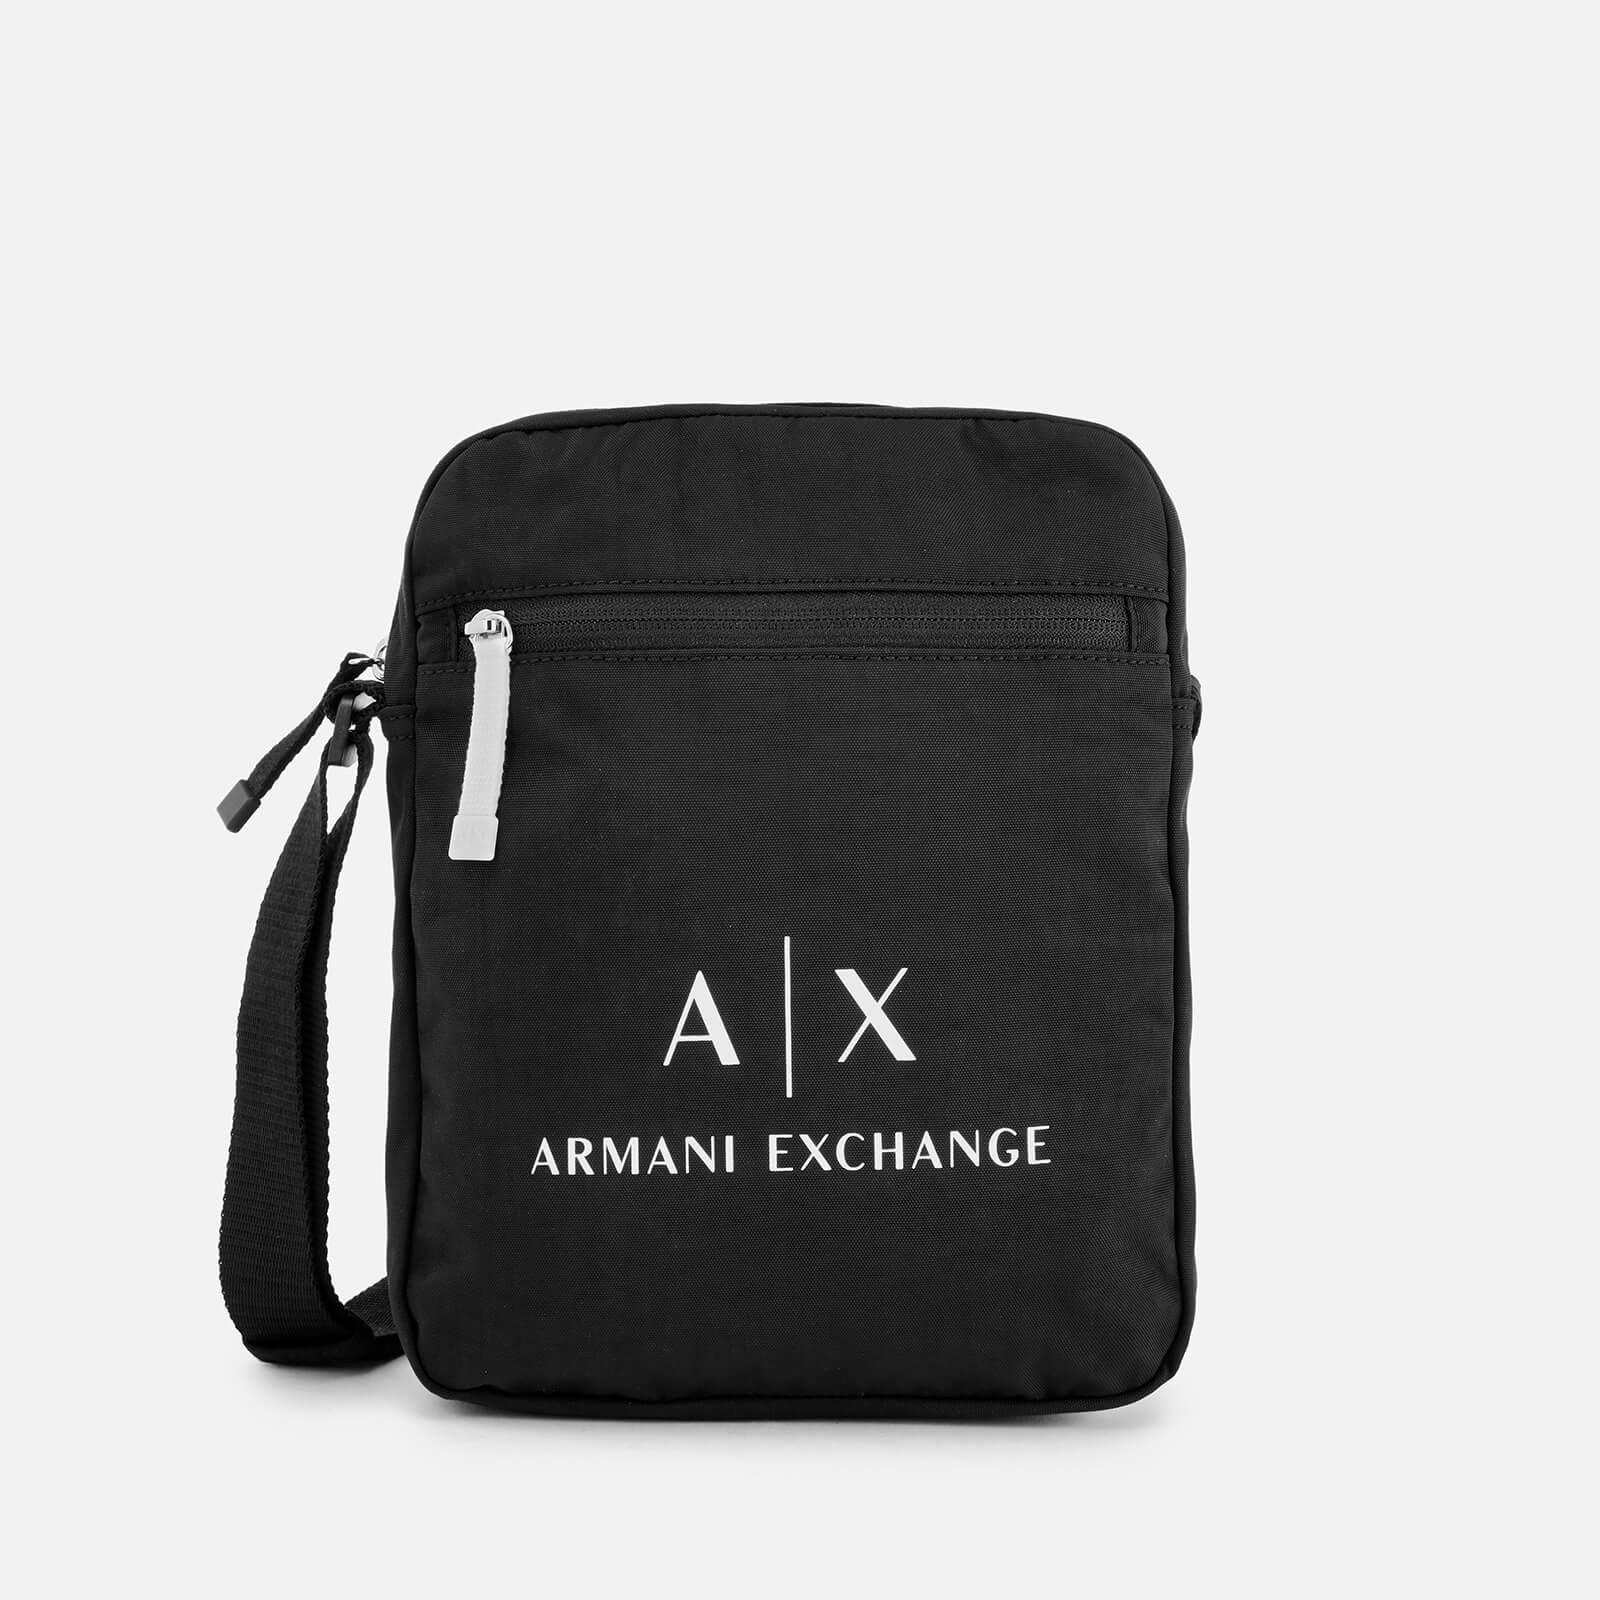 armani exchange side bag - 57% OFF 